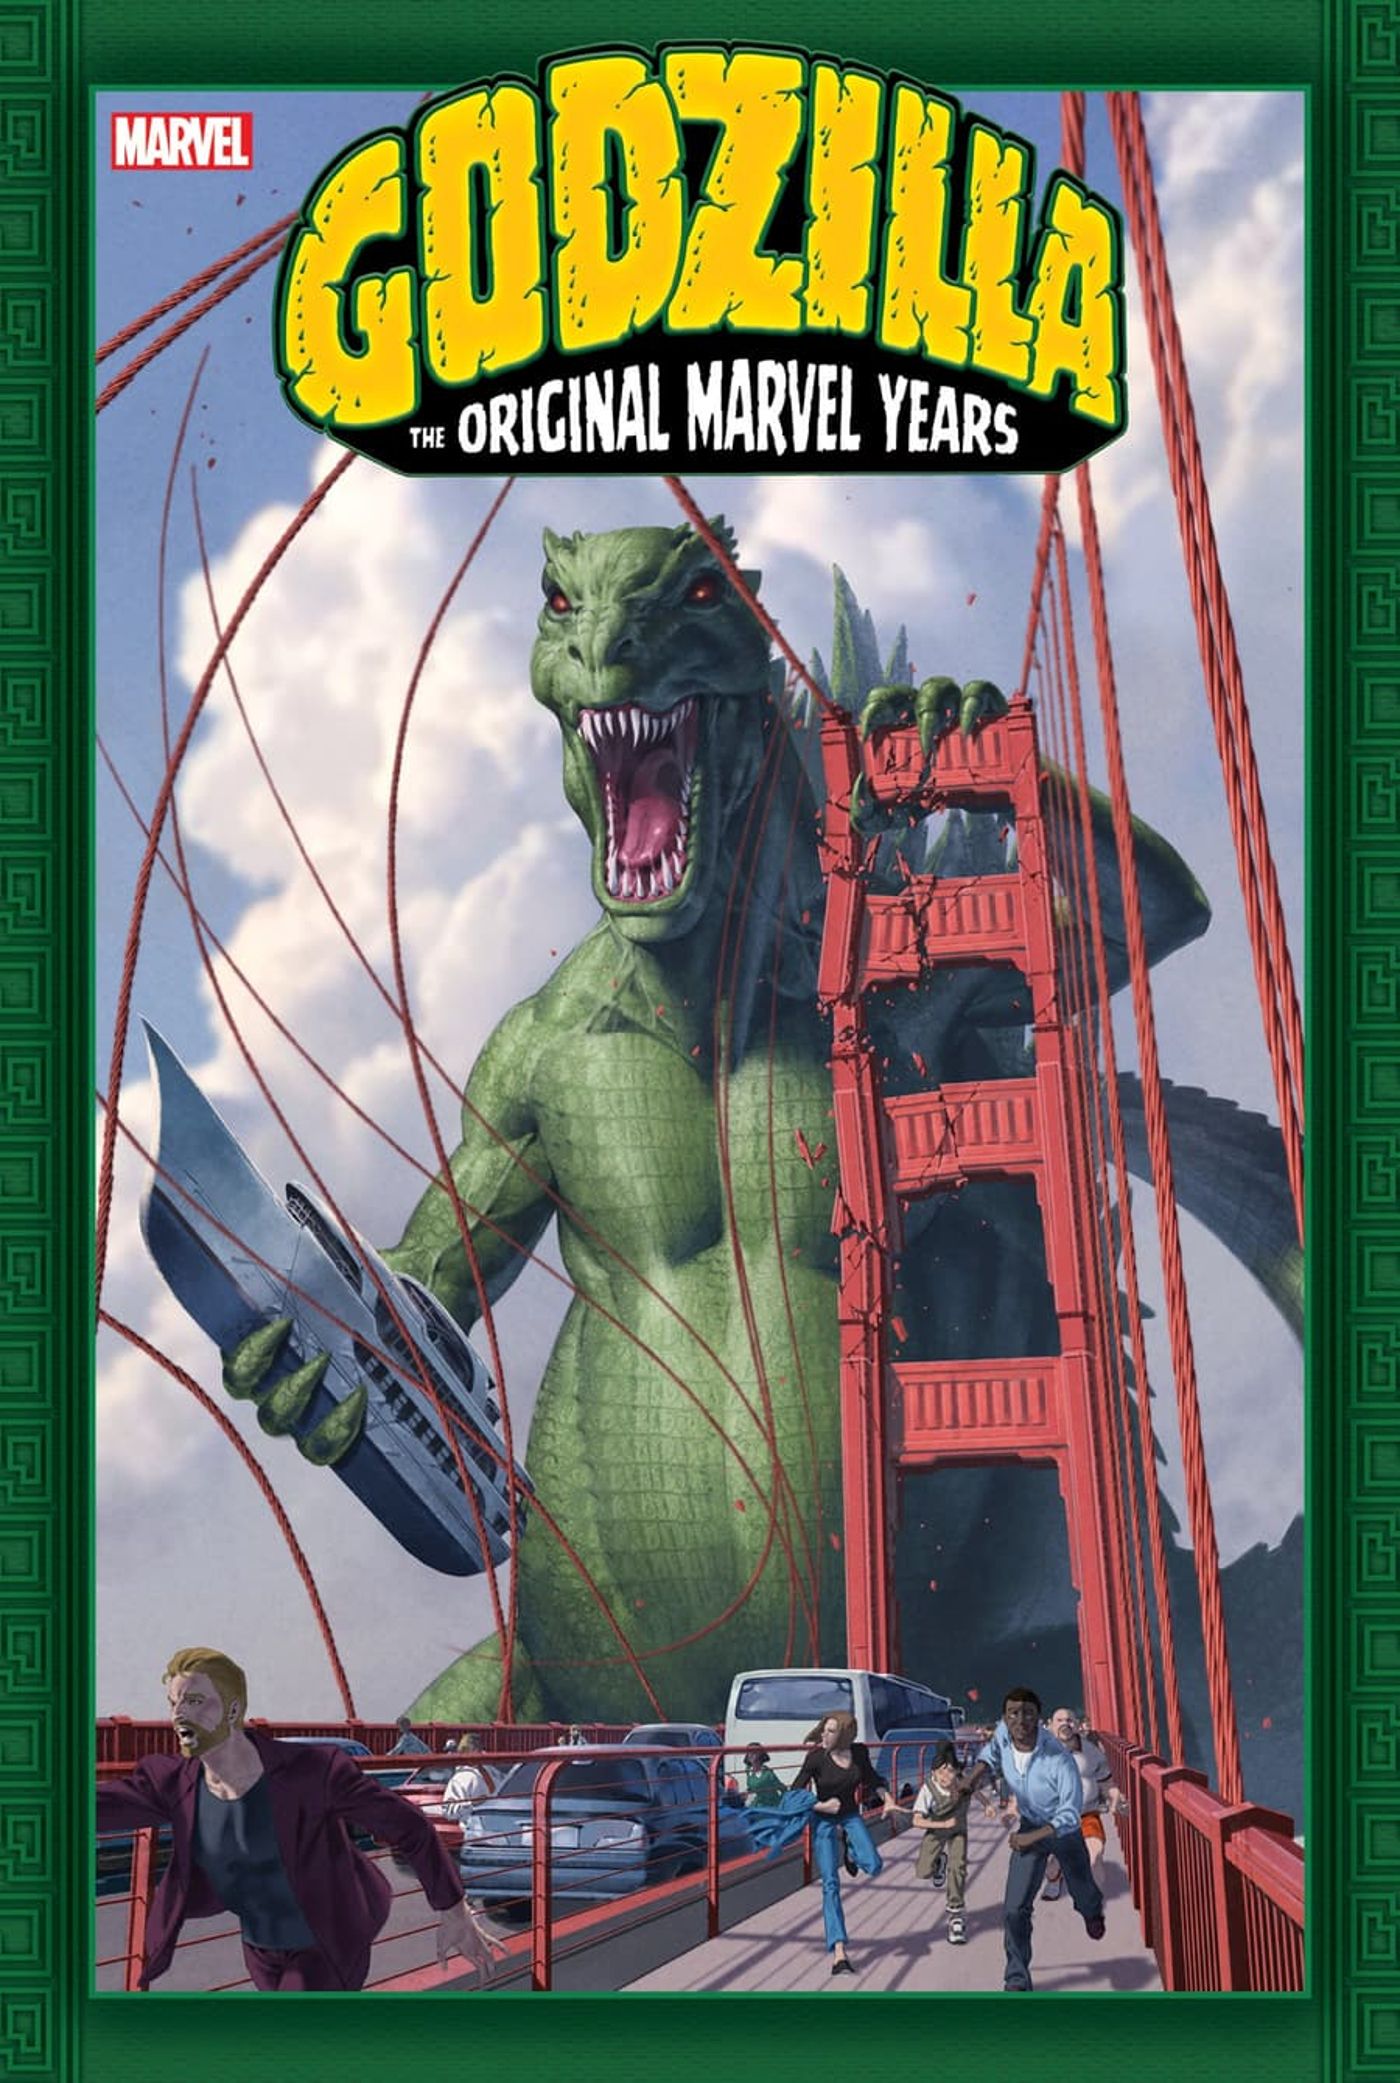 Godzilla the Original Marvel Years cover, depicting Godzilla attacking a bridge and cars. 